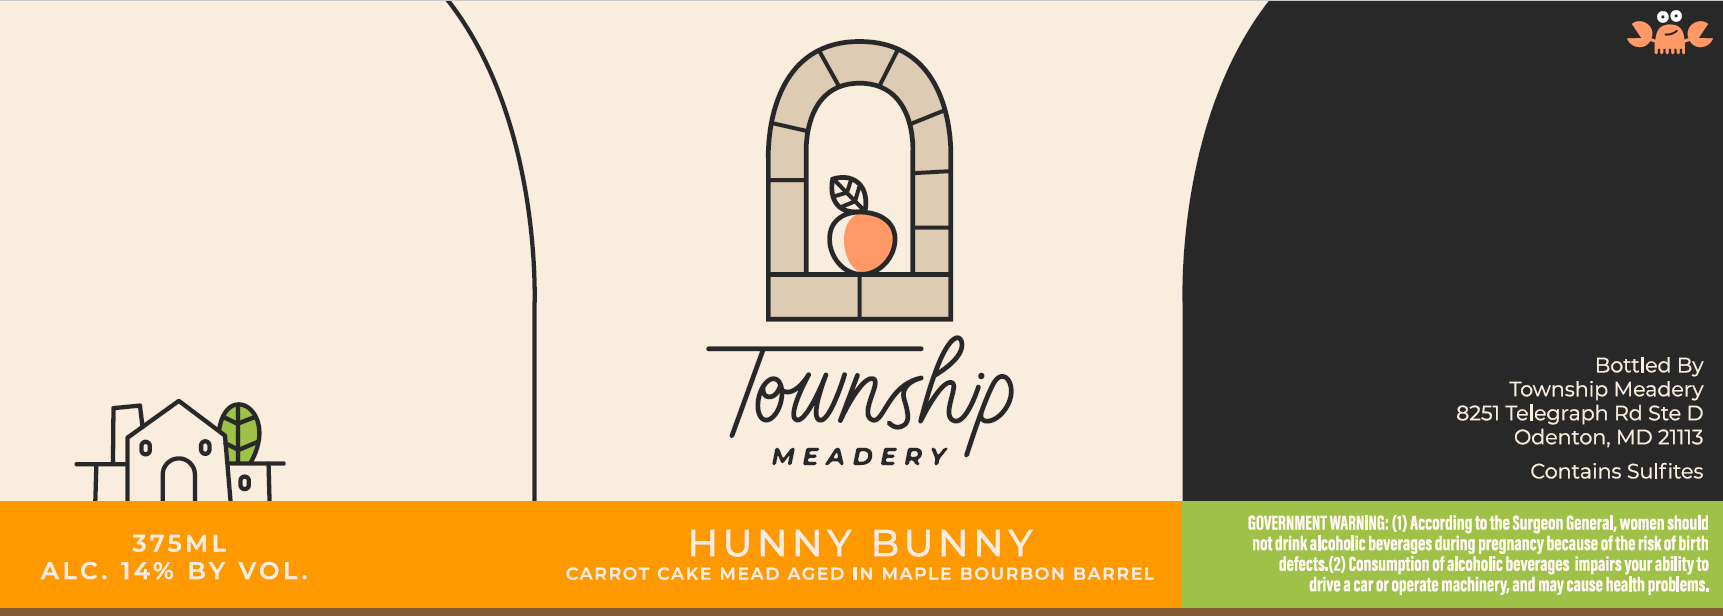 Township Meadery - BA Hunny Bunny 375ml Bottle